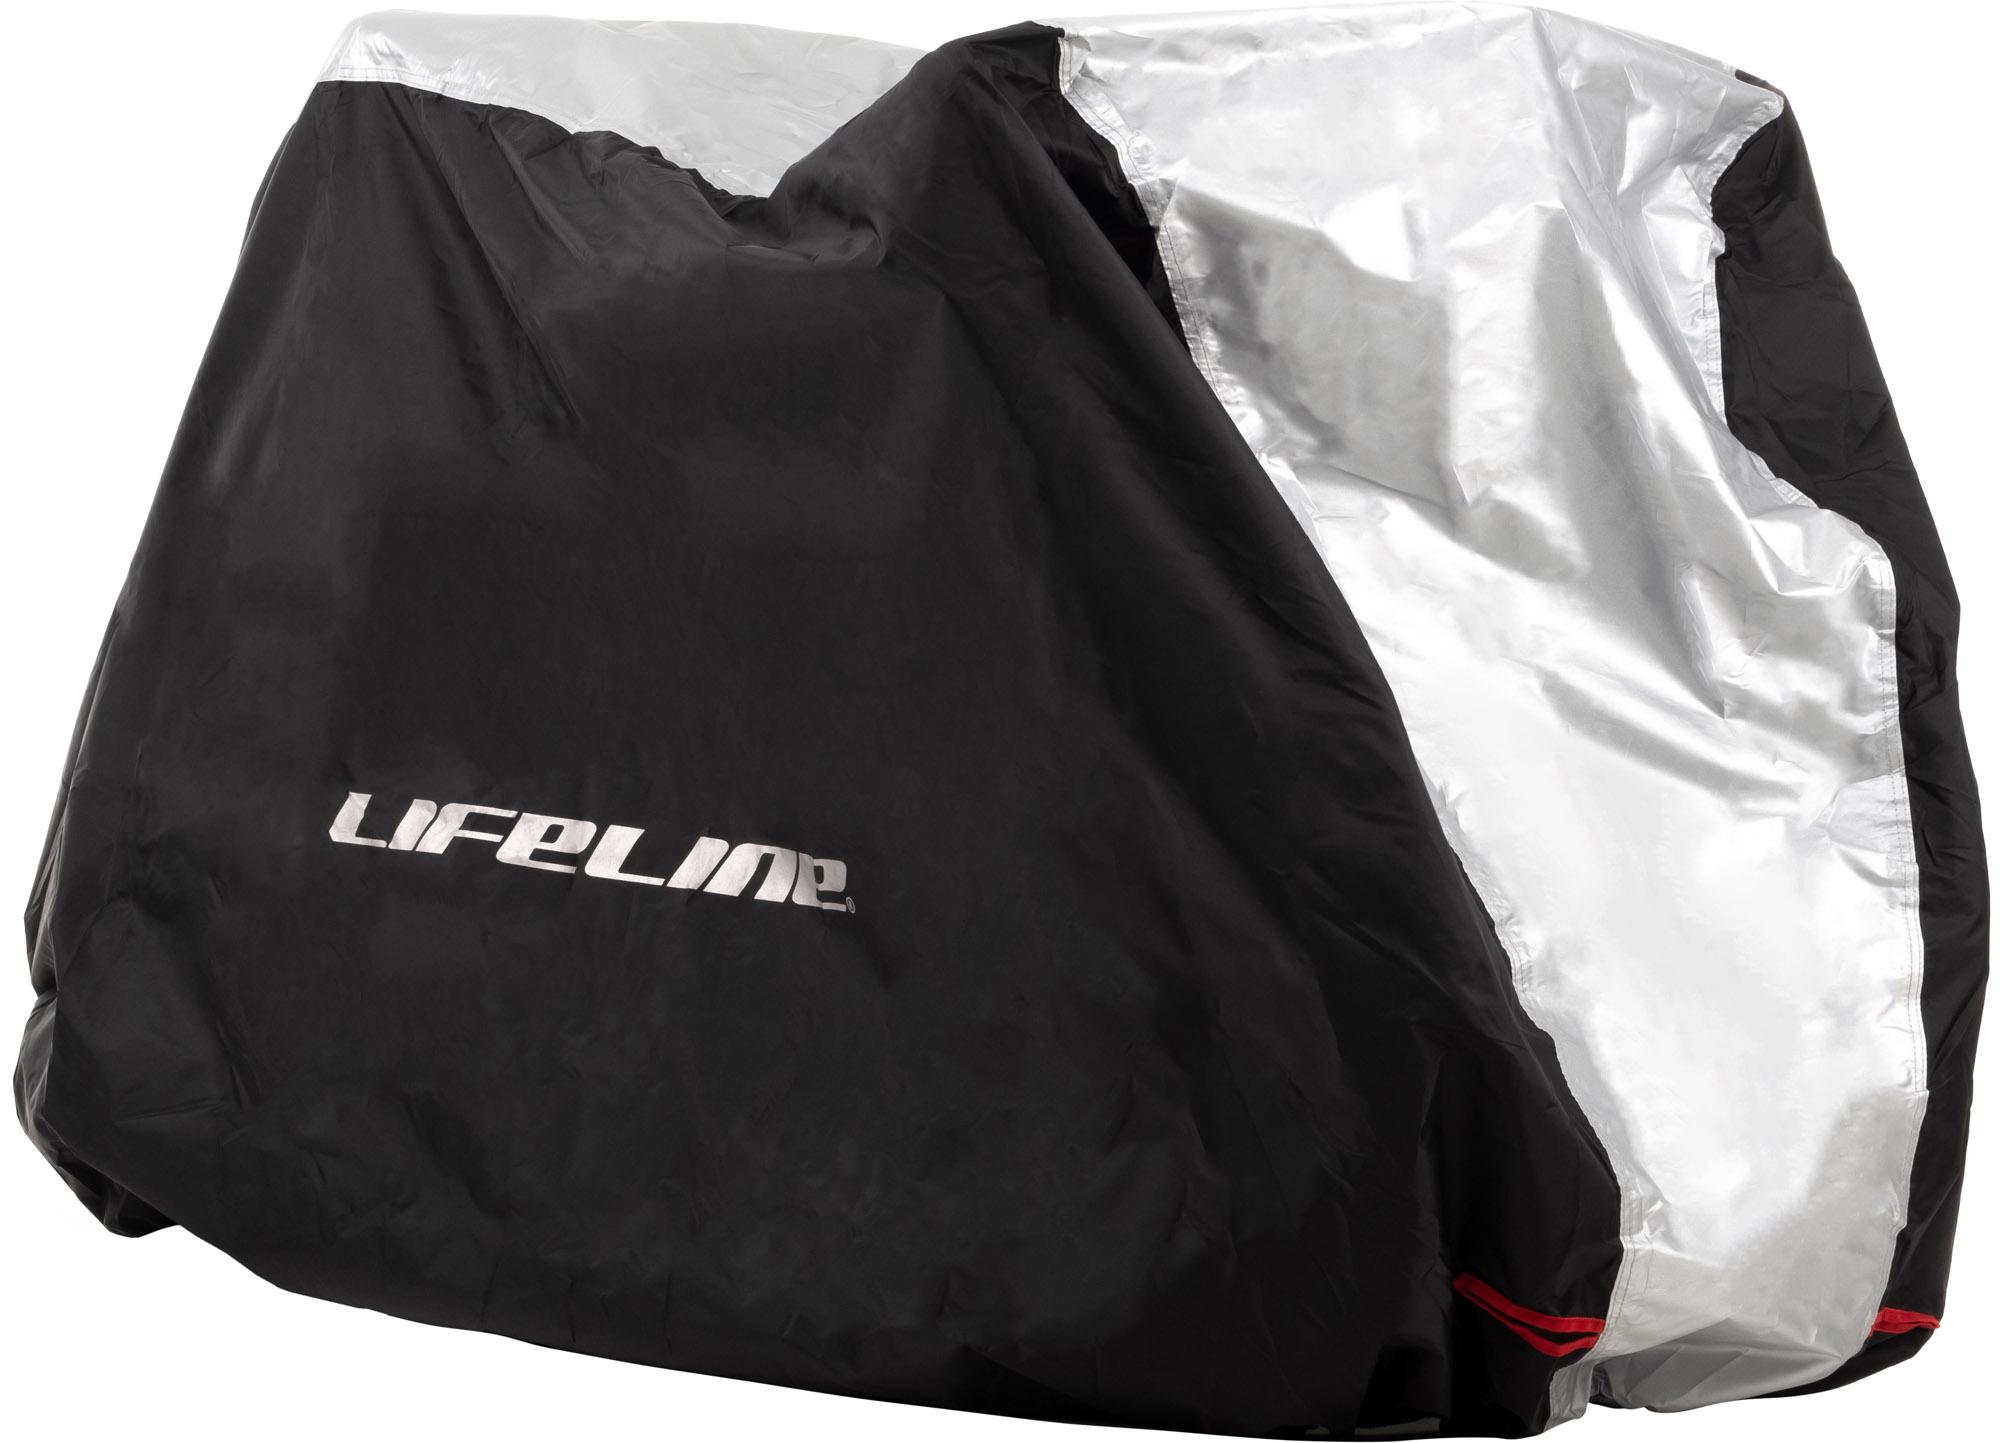 Lifeline Waterproof Double Bike Cover - Black